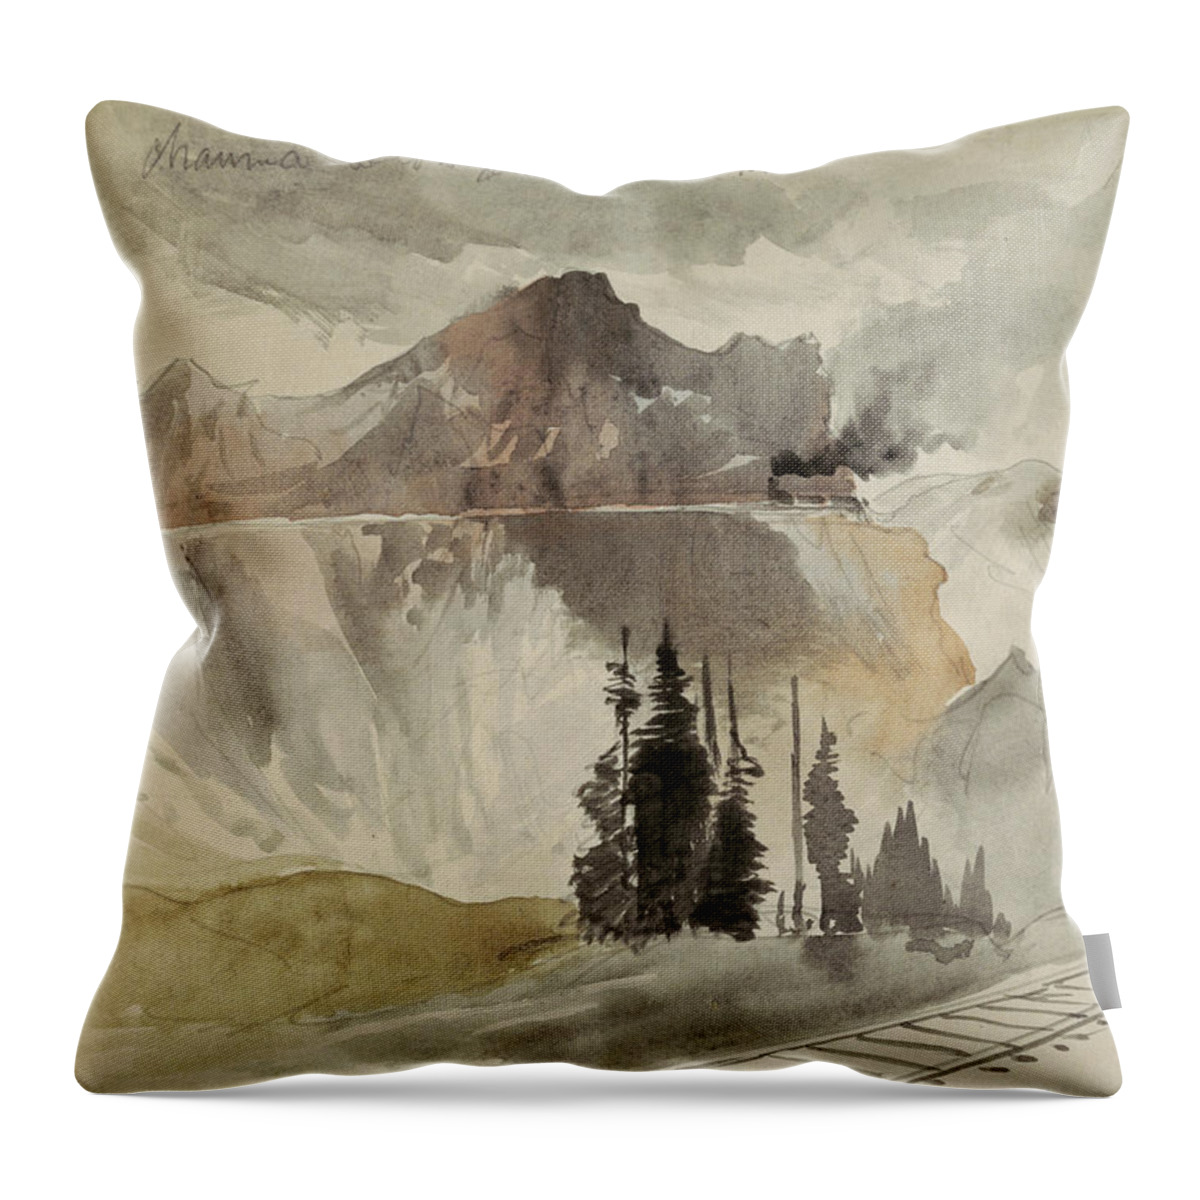 Thomas Moran Throw Pillow featuring the drawing Chama Below the Summit, 1892 by Thomas Moran